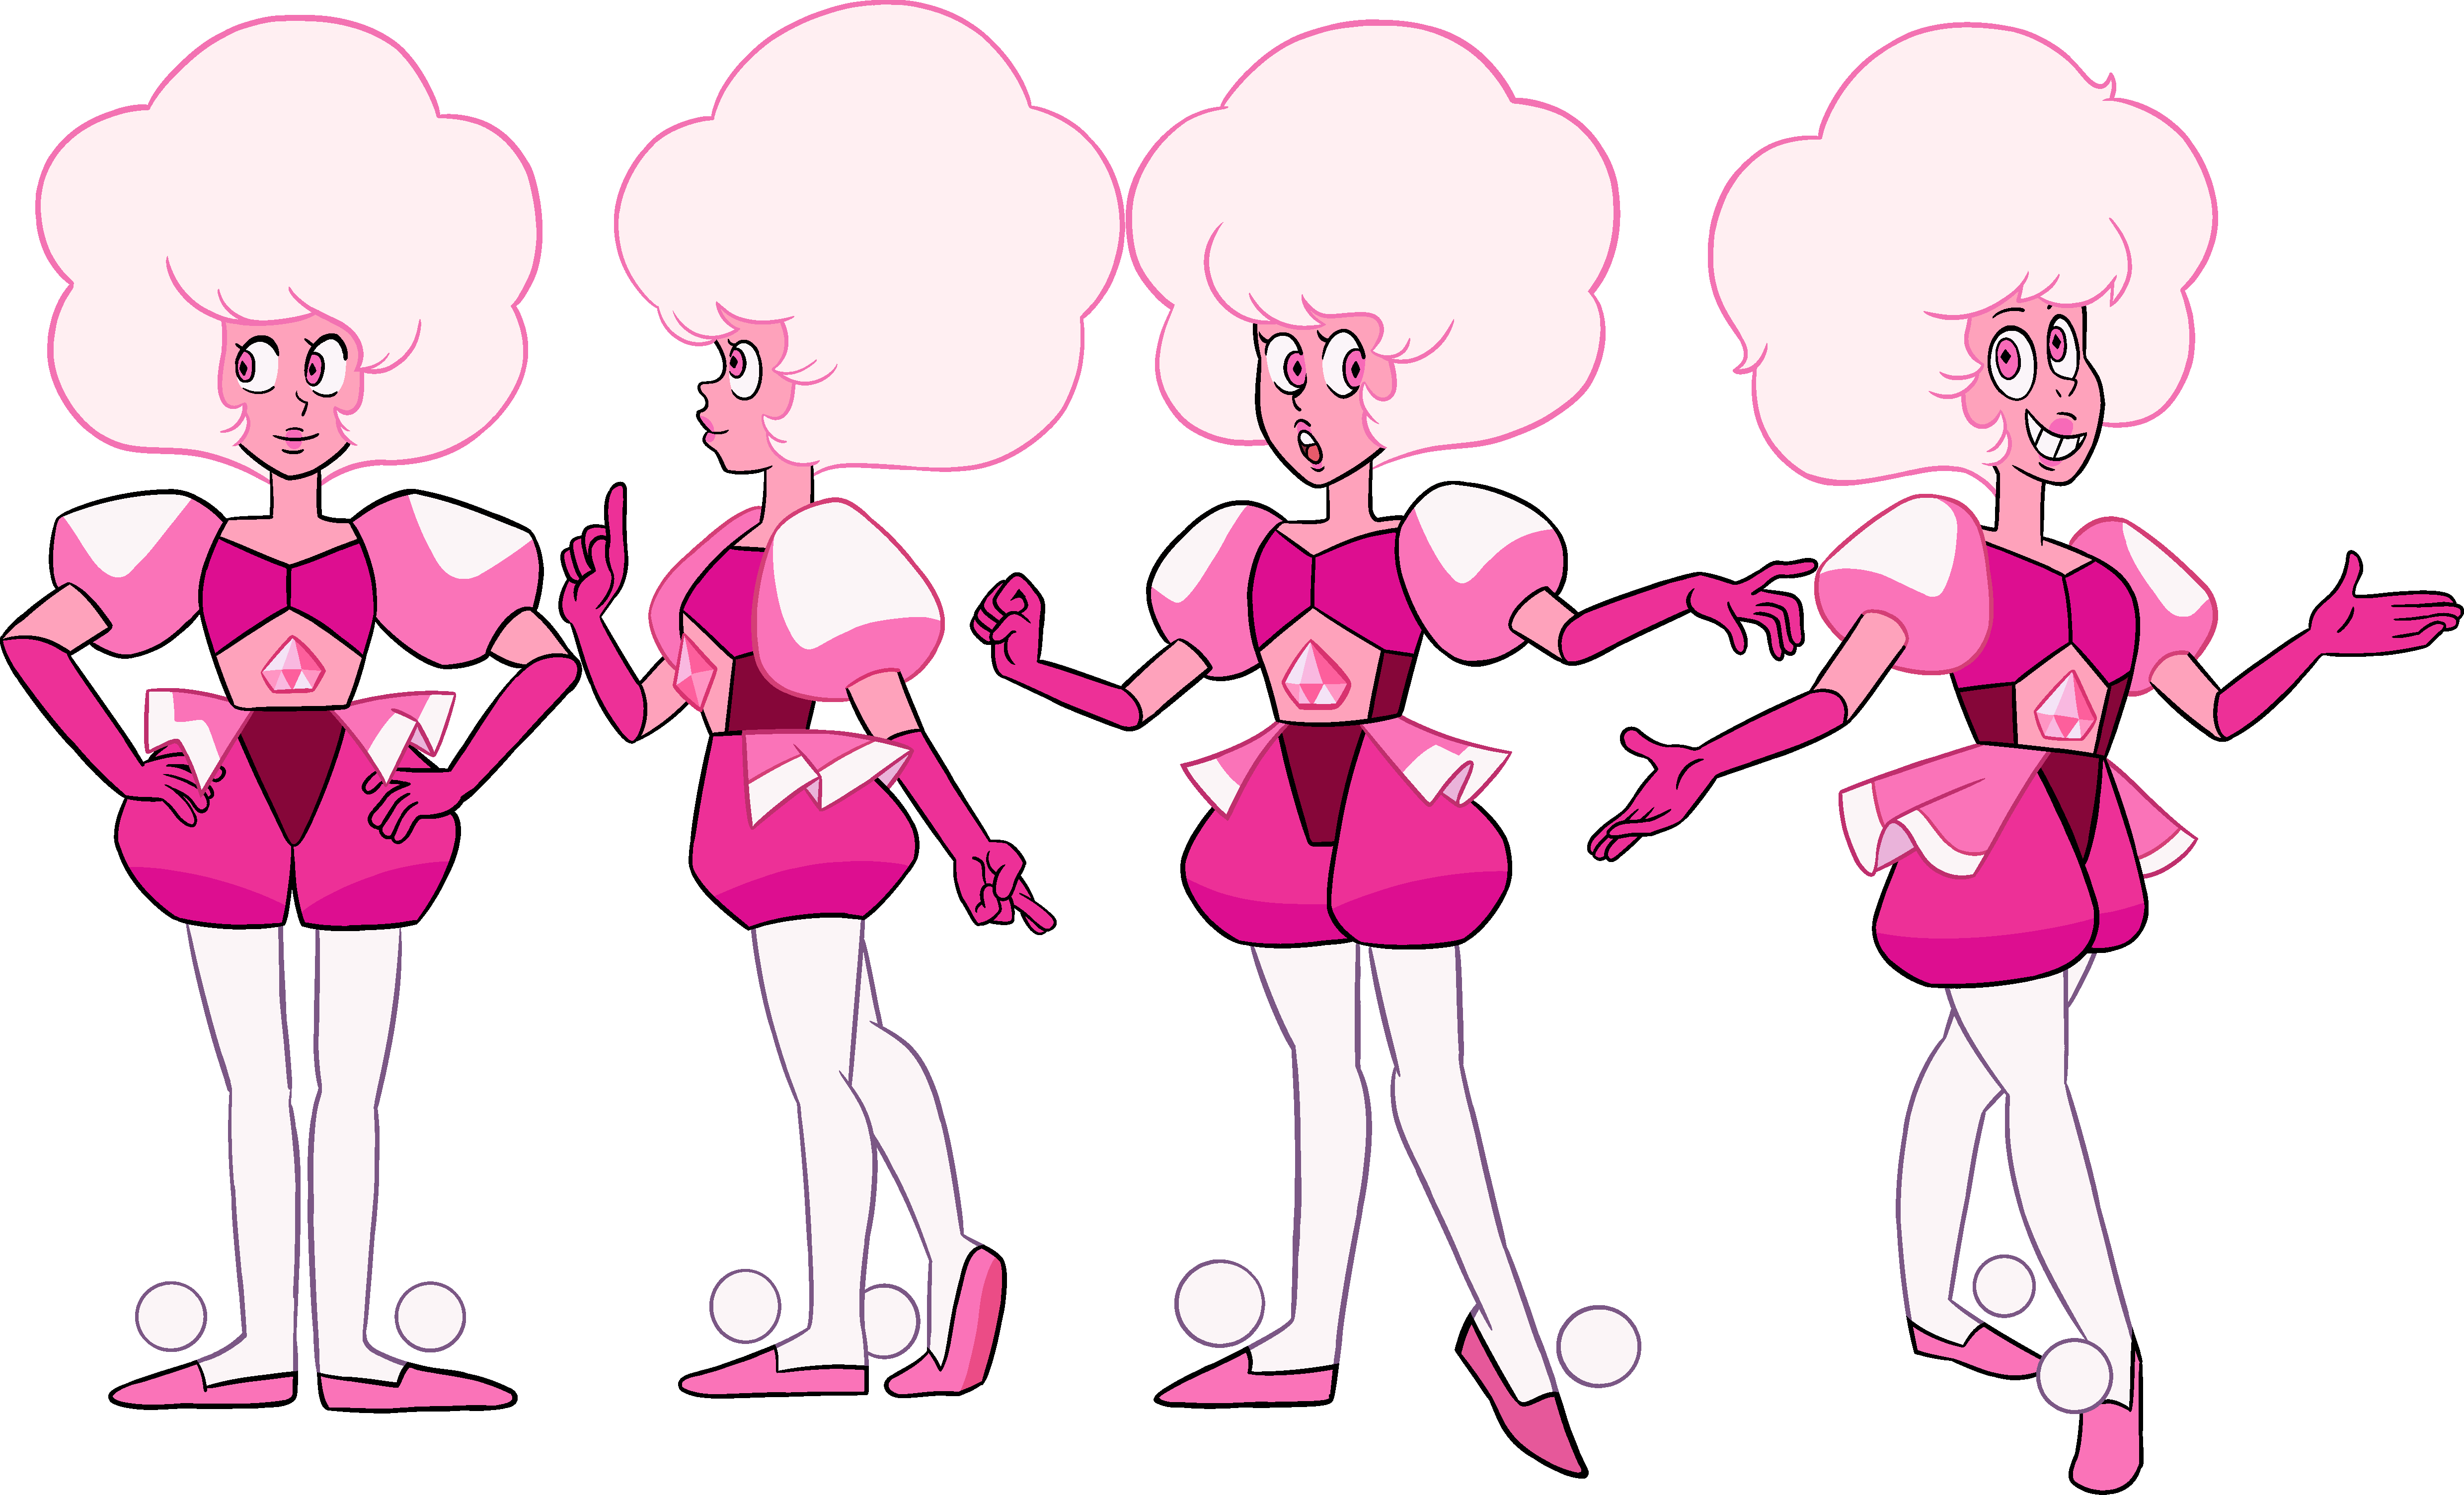 Pink Diamond from Steven universe.